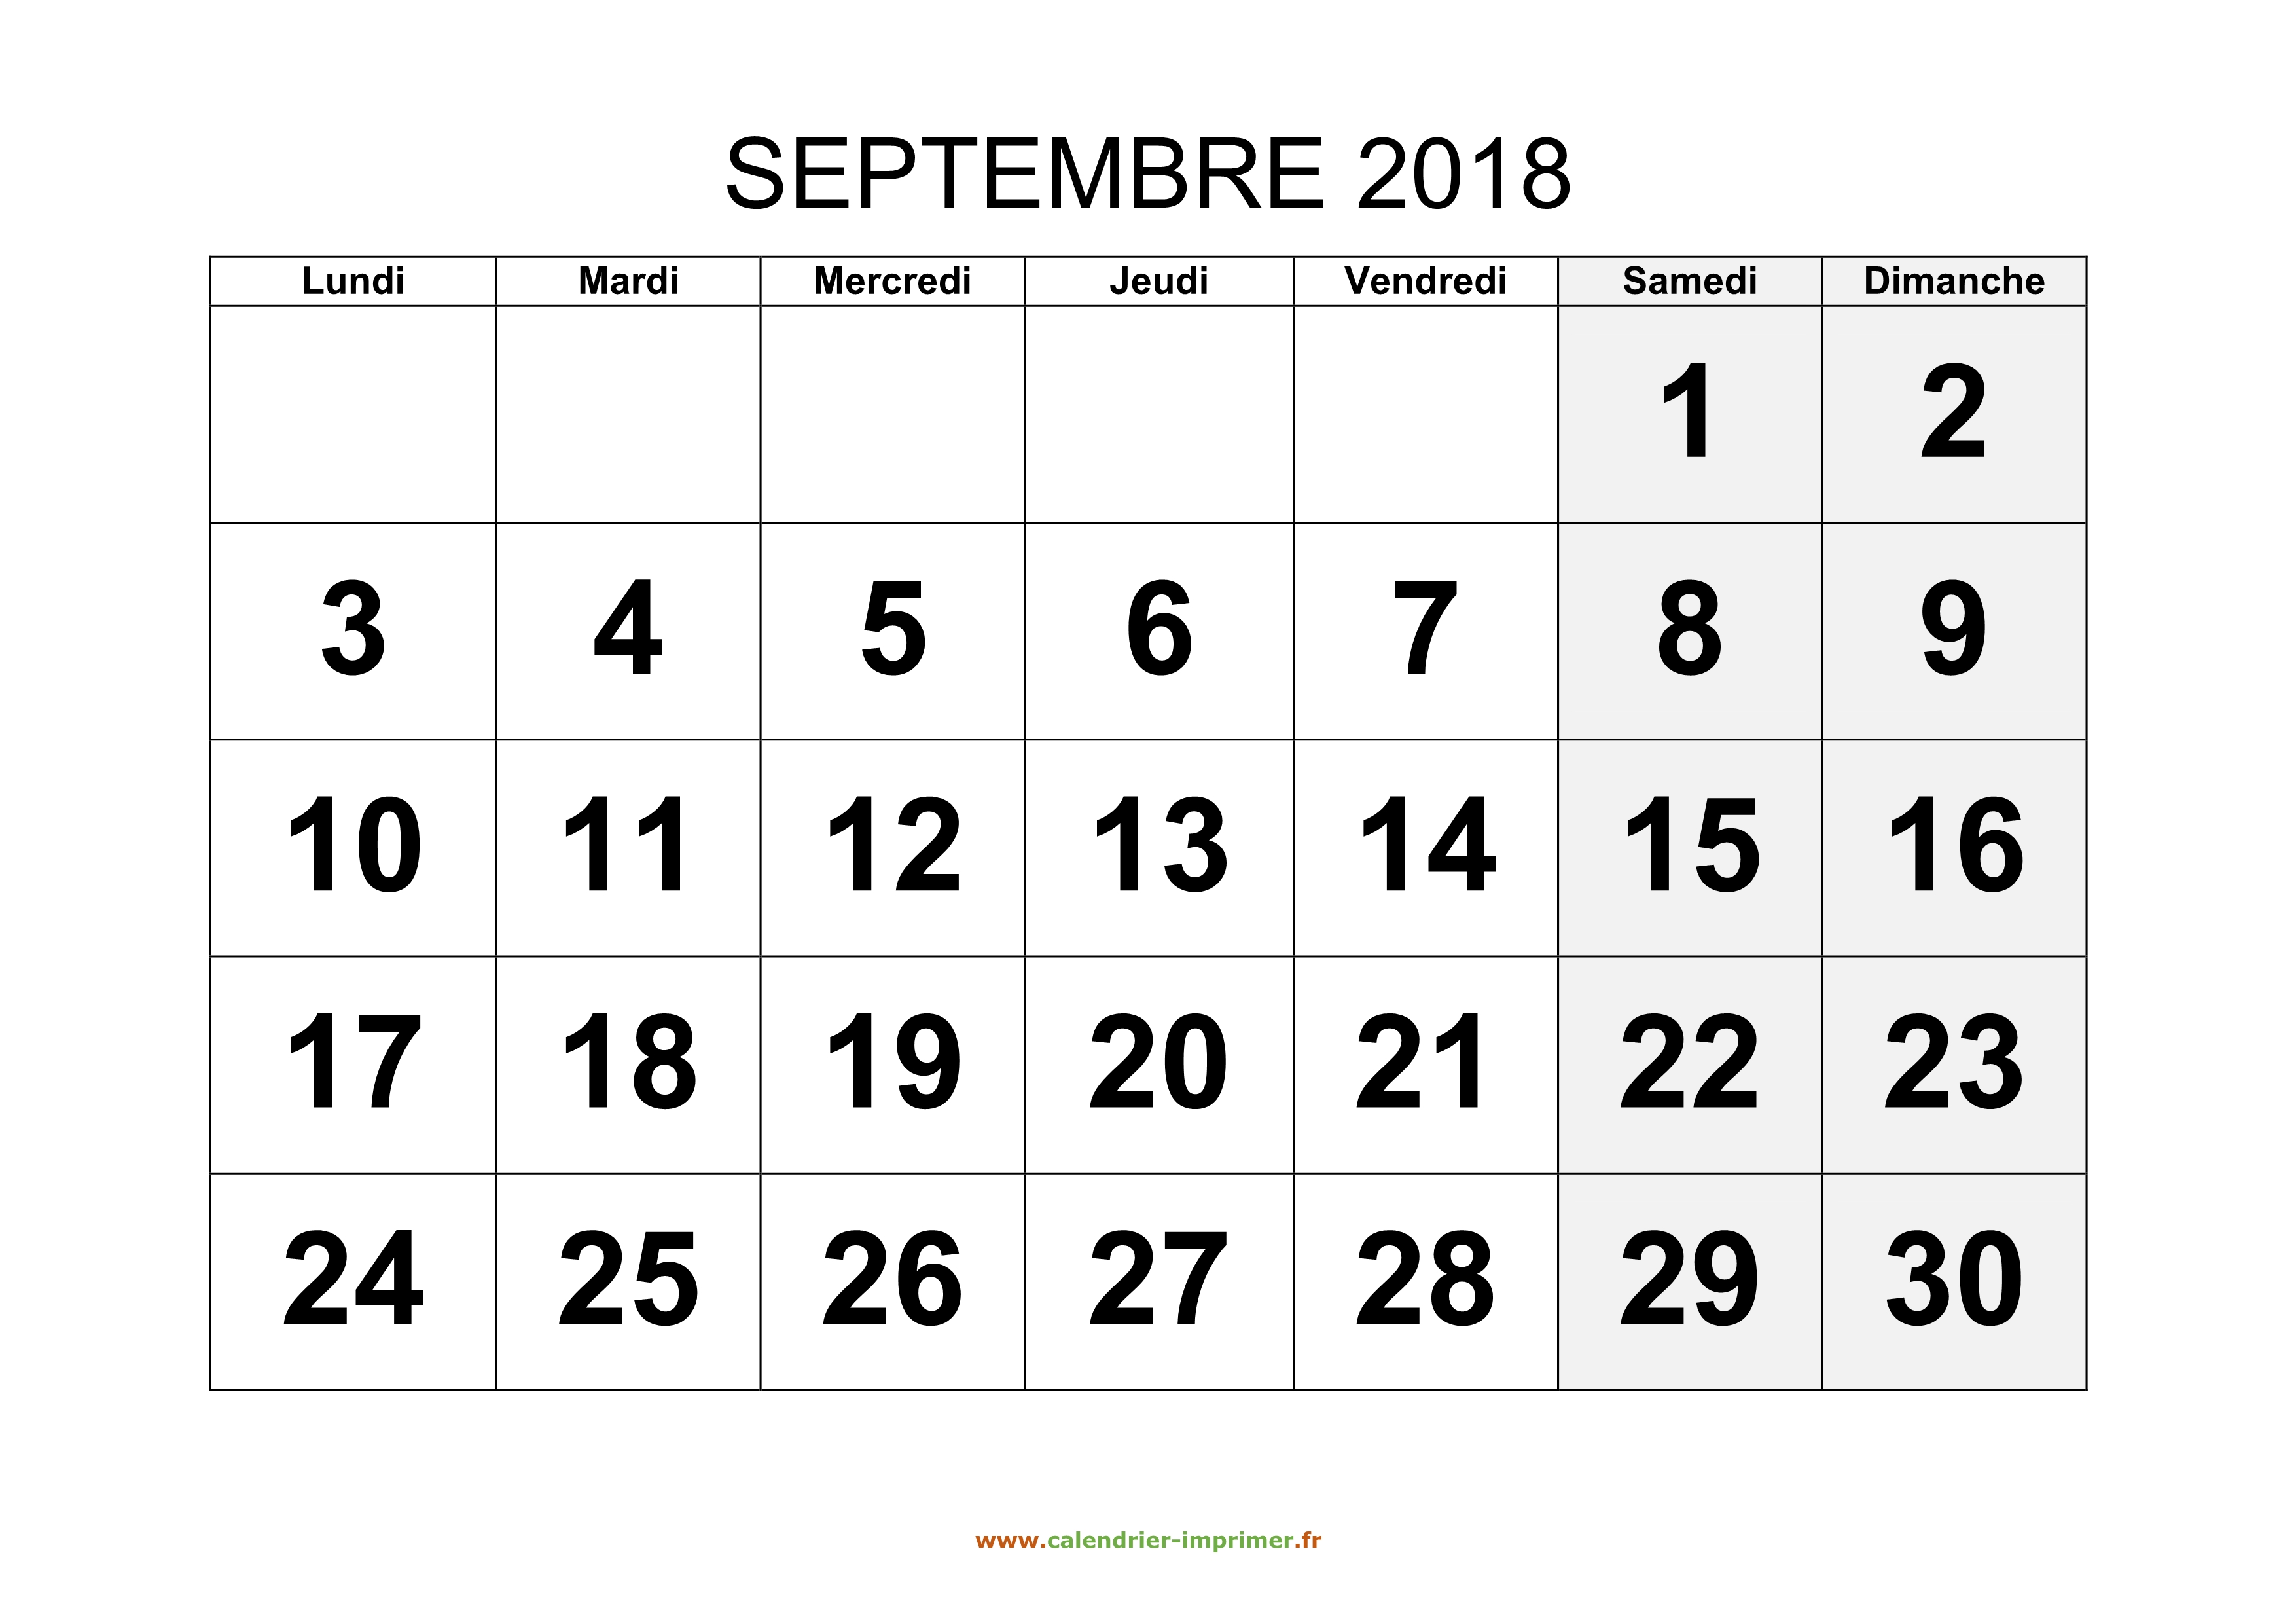 Calendrier à Imprimer Septembre 2018 à Septembre 2022 Calendrier Septembre 2018 à imprimer